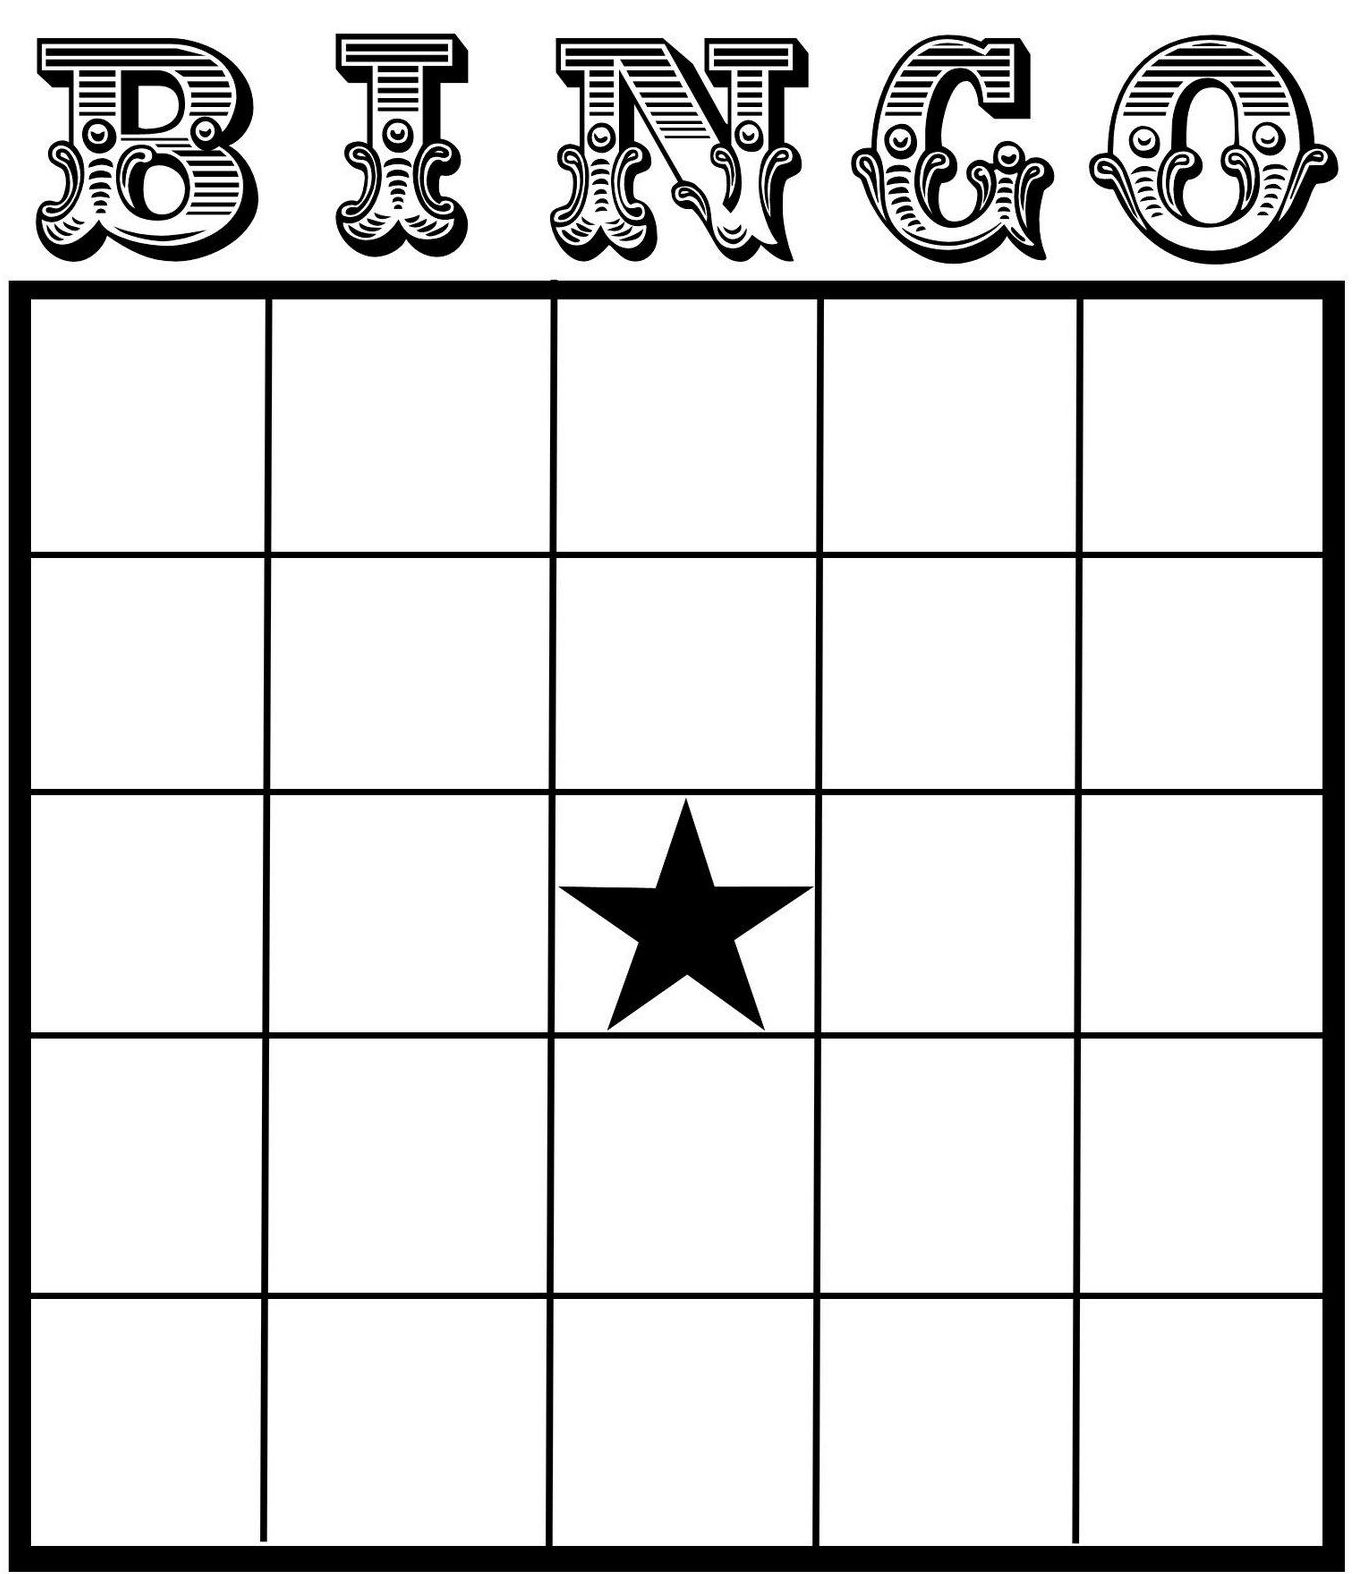 Nature BINGO! - Tree House Learning Throughout Blank Bingo Template Pdf